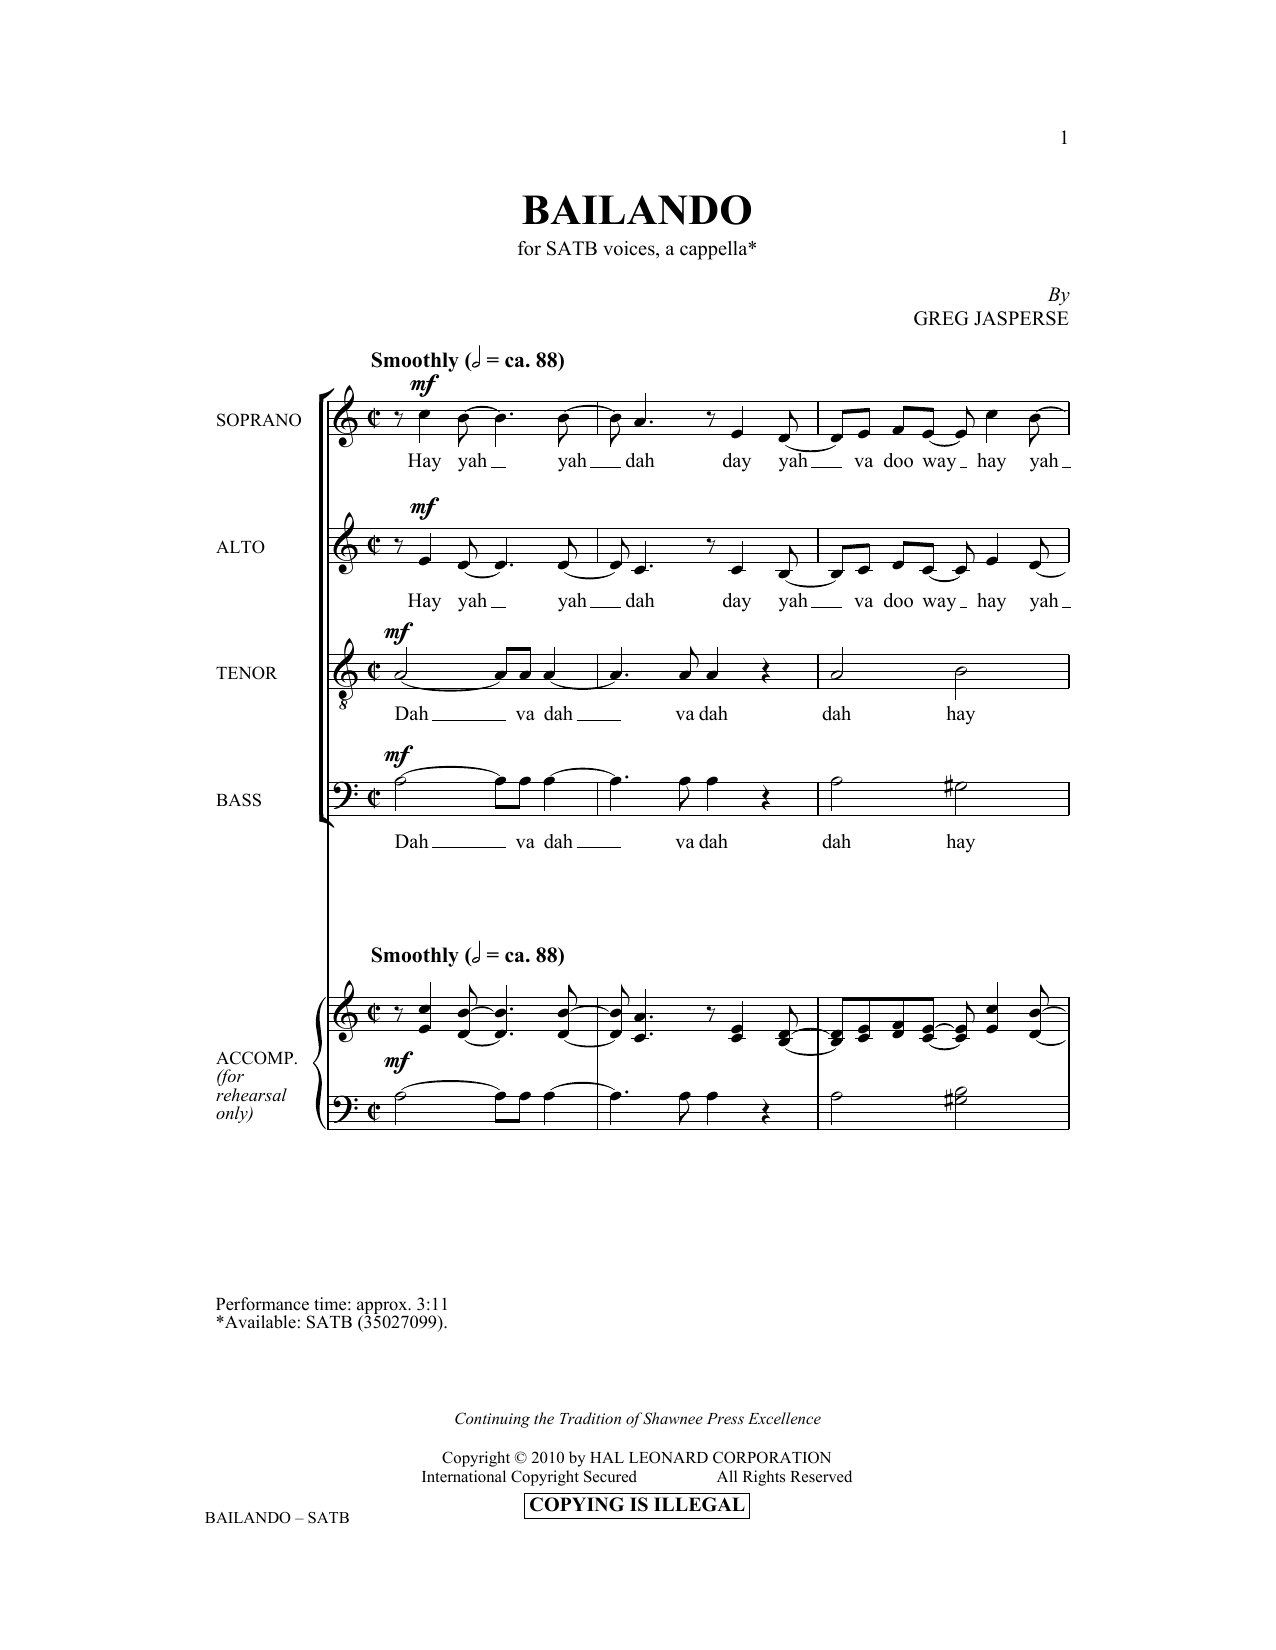 Greg Jasperse Bailando Sheet Music Notes & Chords for SATB - Download or Print PDF